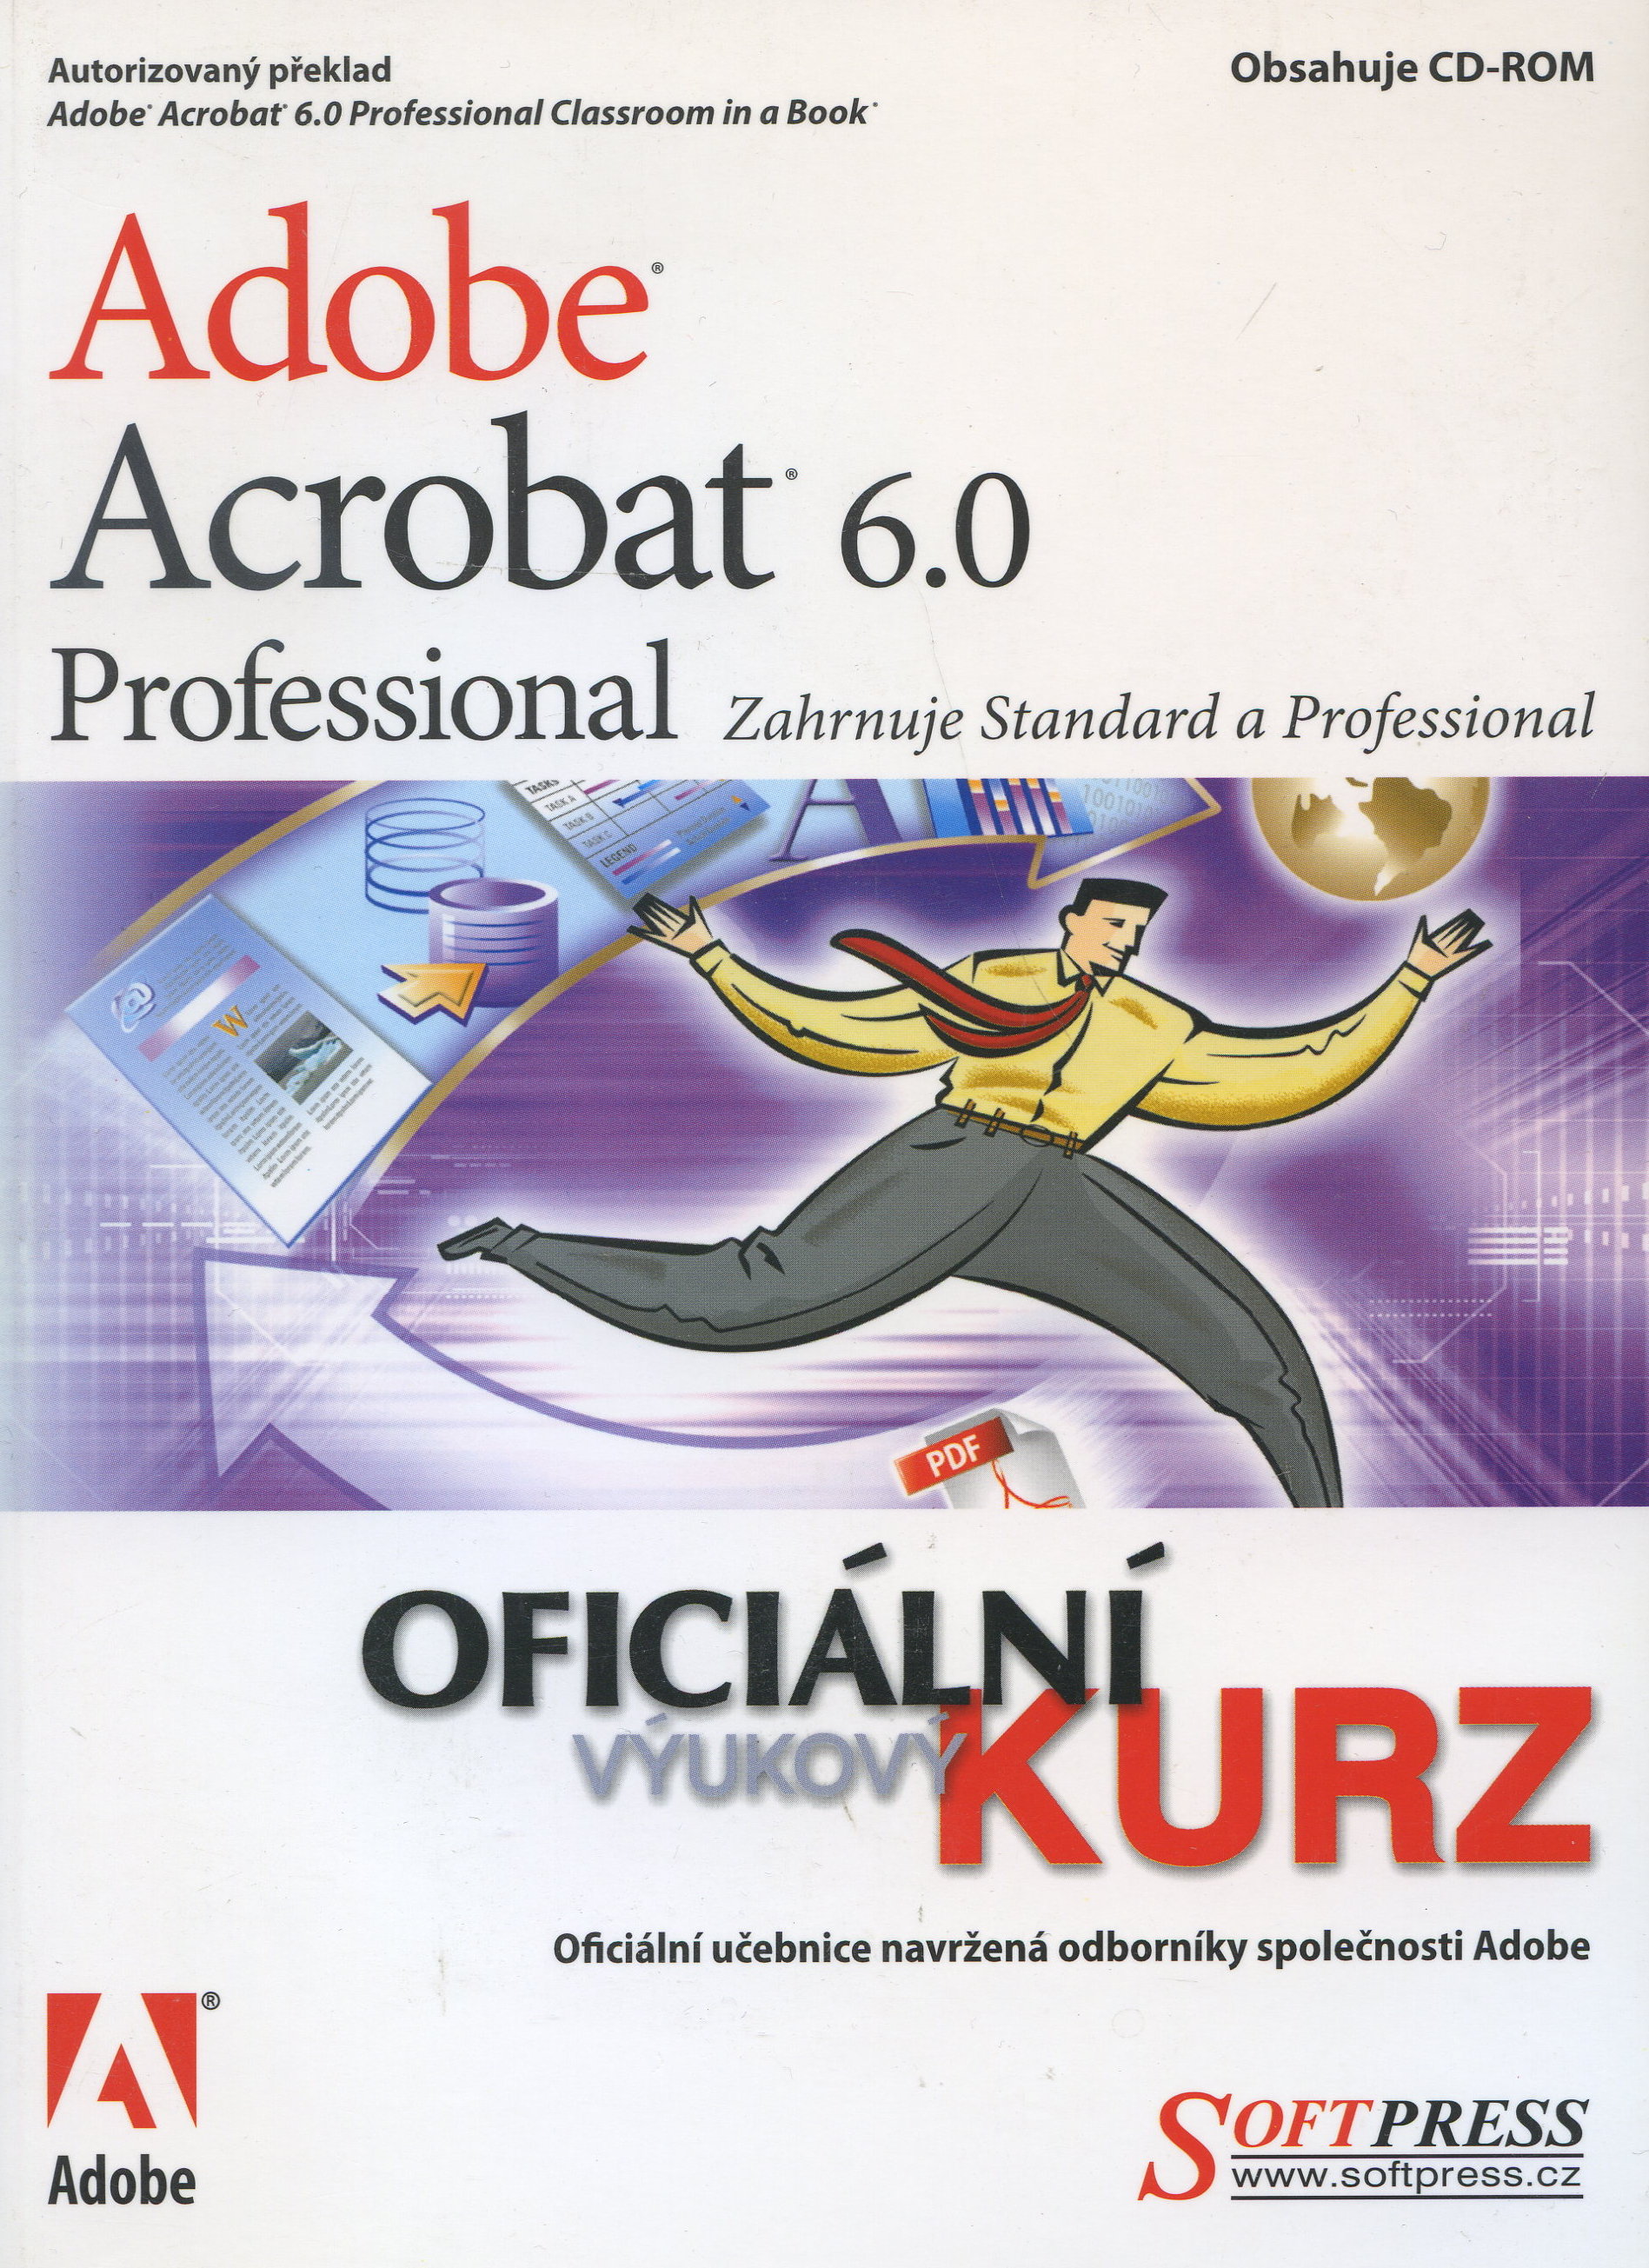 adobe acrobat 6.0 professional free download filehippo